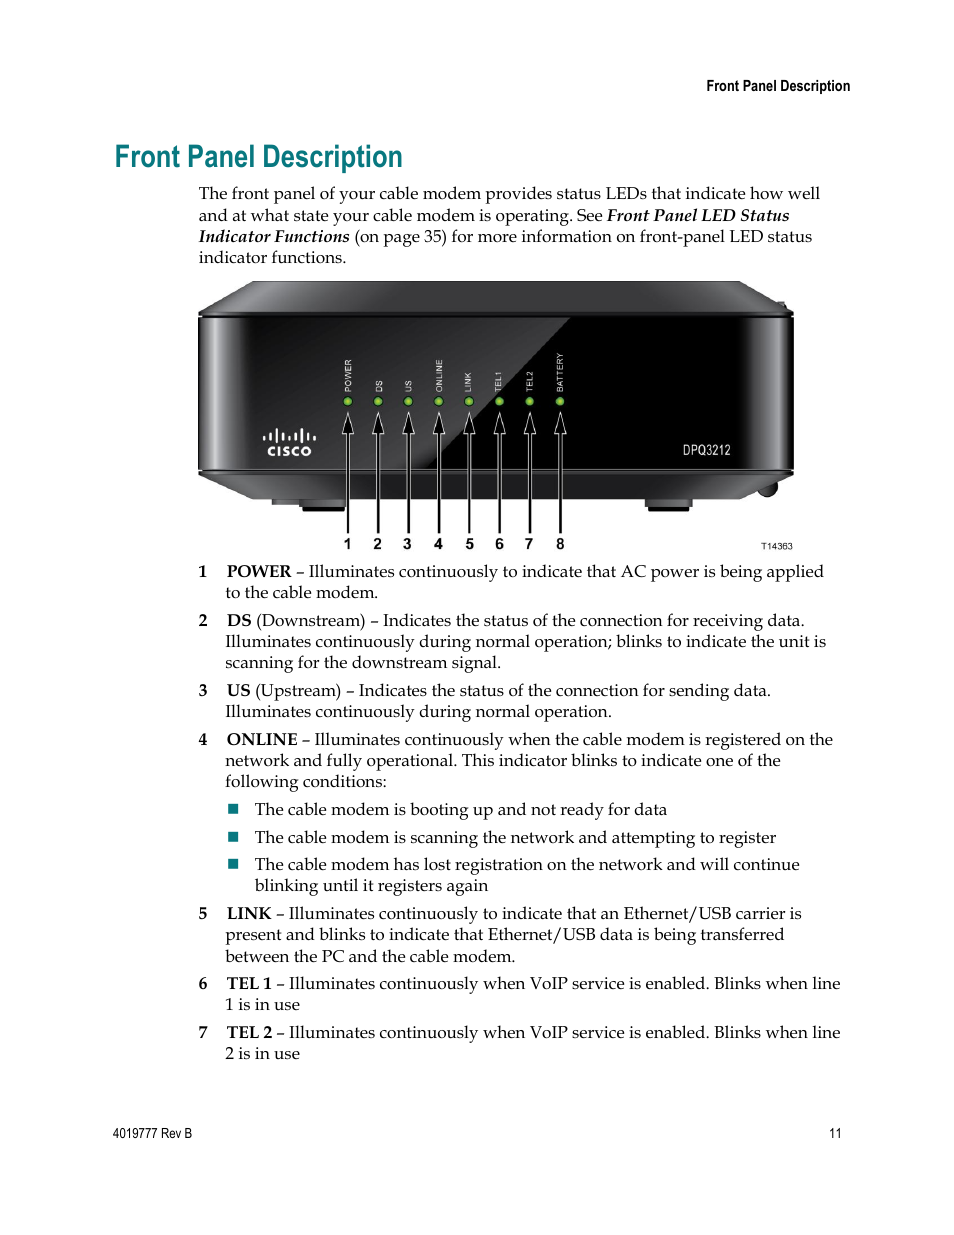 Front panel description | Cisco DPQ3212 User Manual | Page 11 / 40